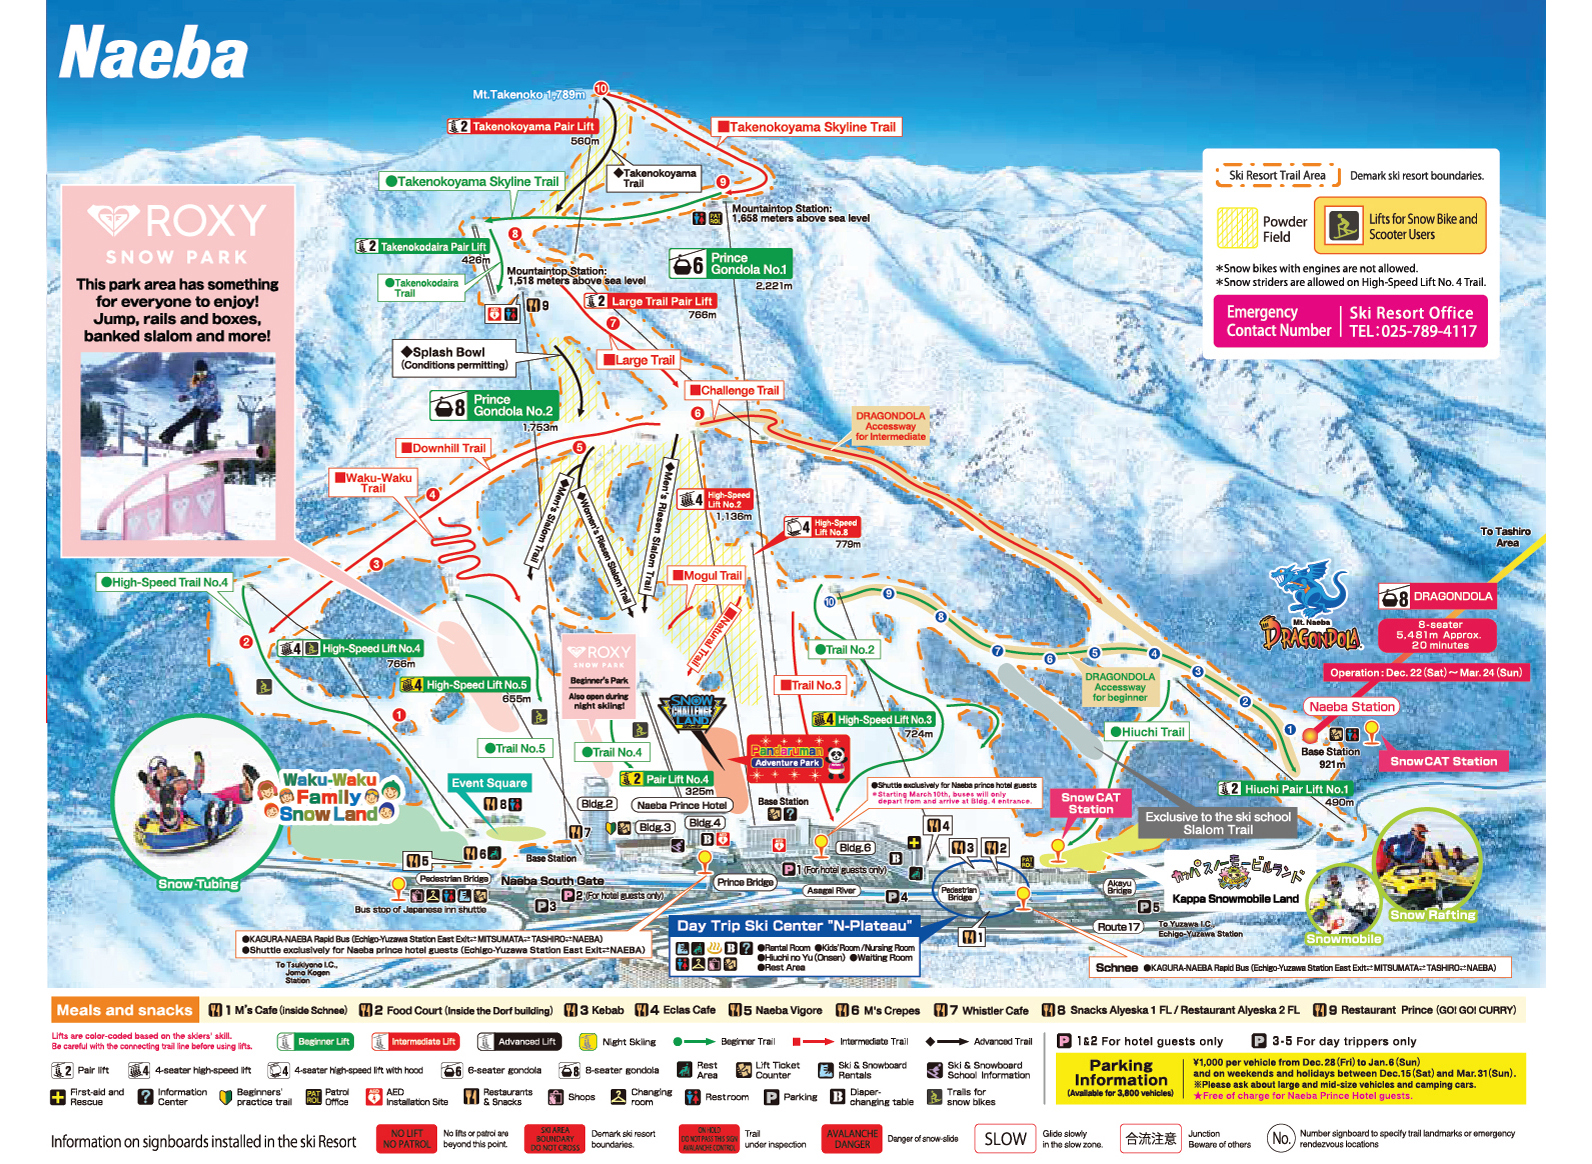 iCamp Japan Naeba Ski Information